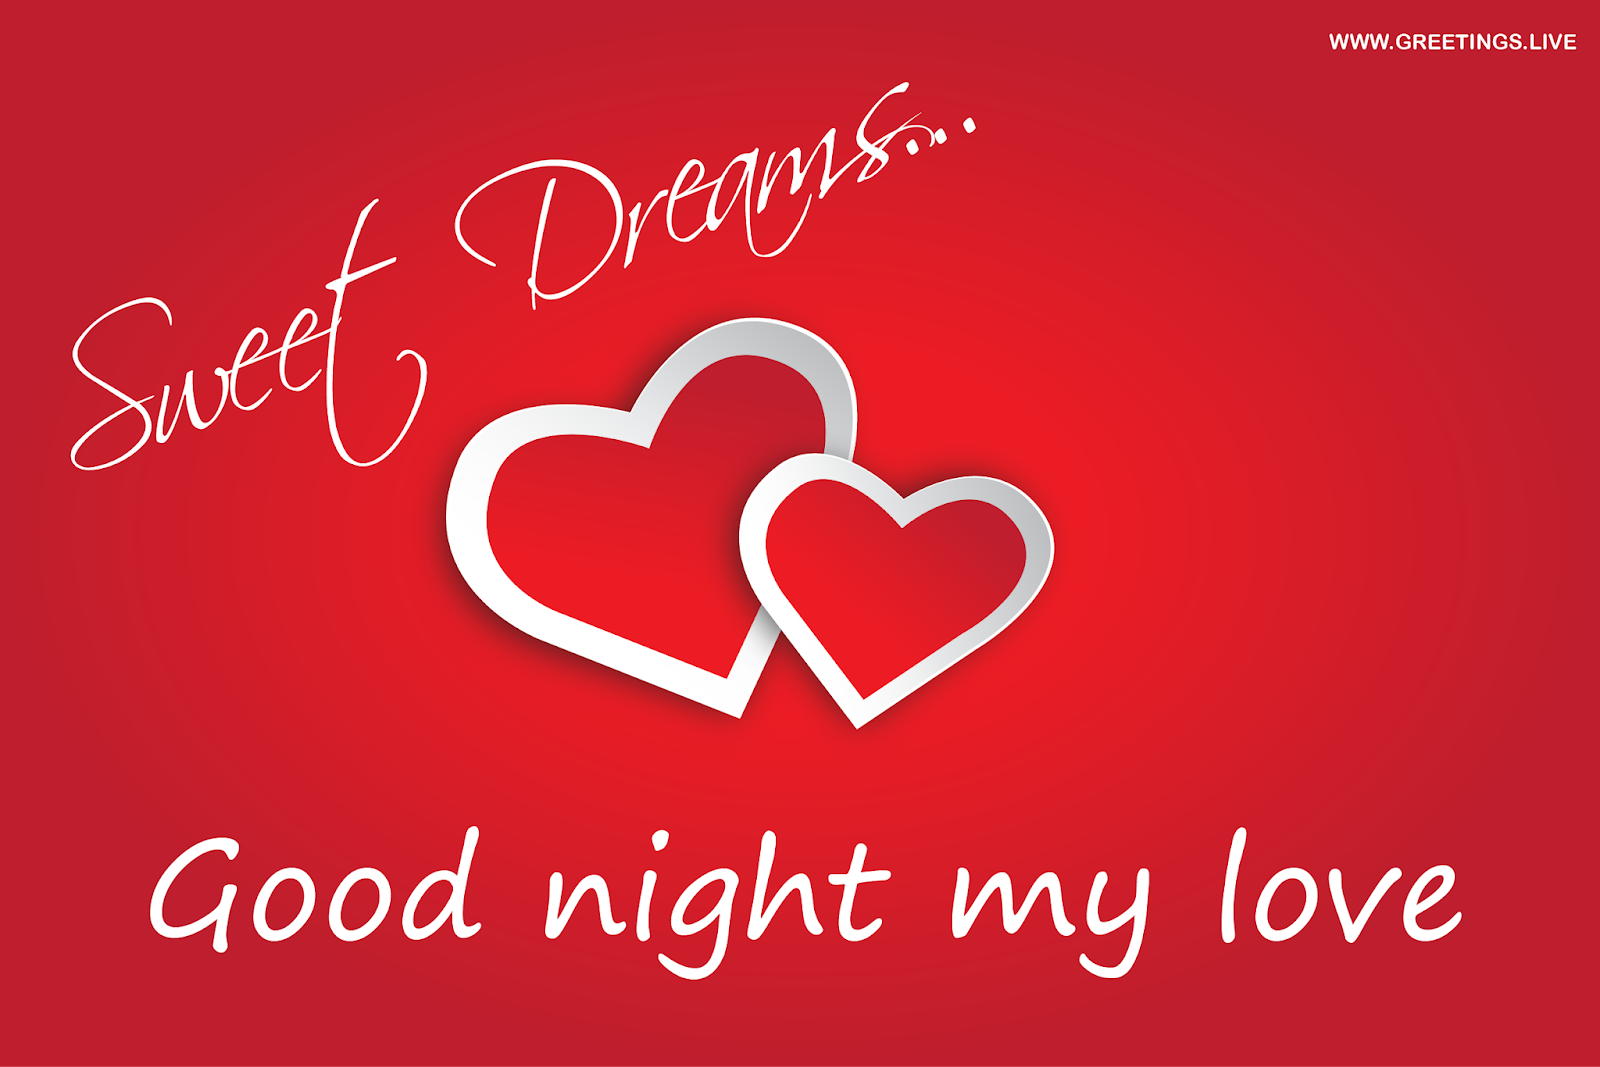 Welcome to love. Good Night my Love. Good Night my Sweet Love. Good Night, my beloved.. Good Night my Love image.